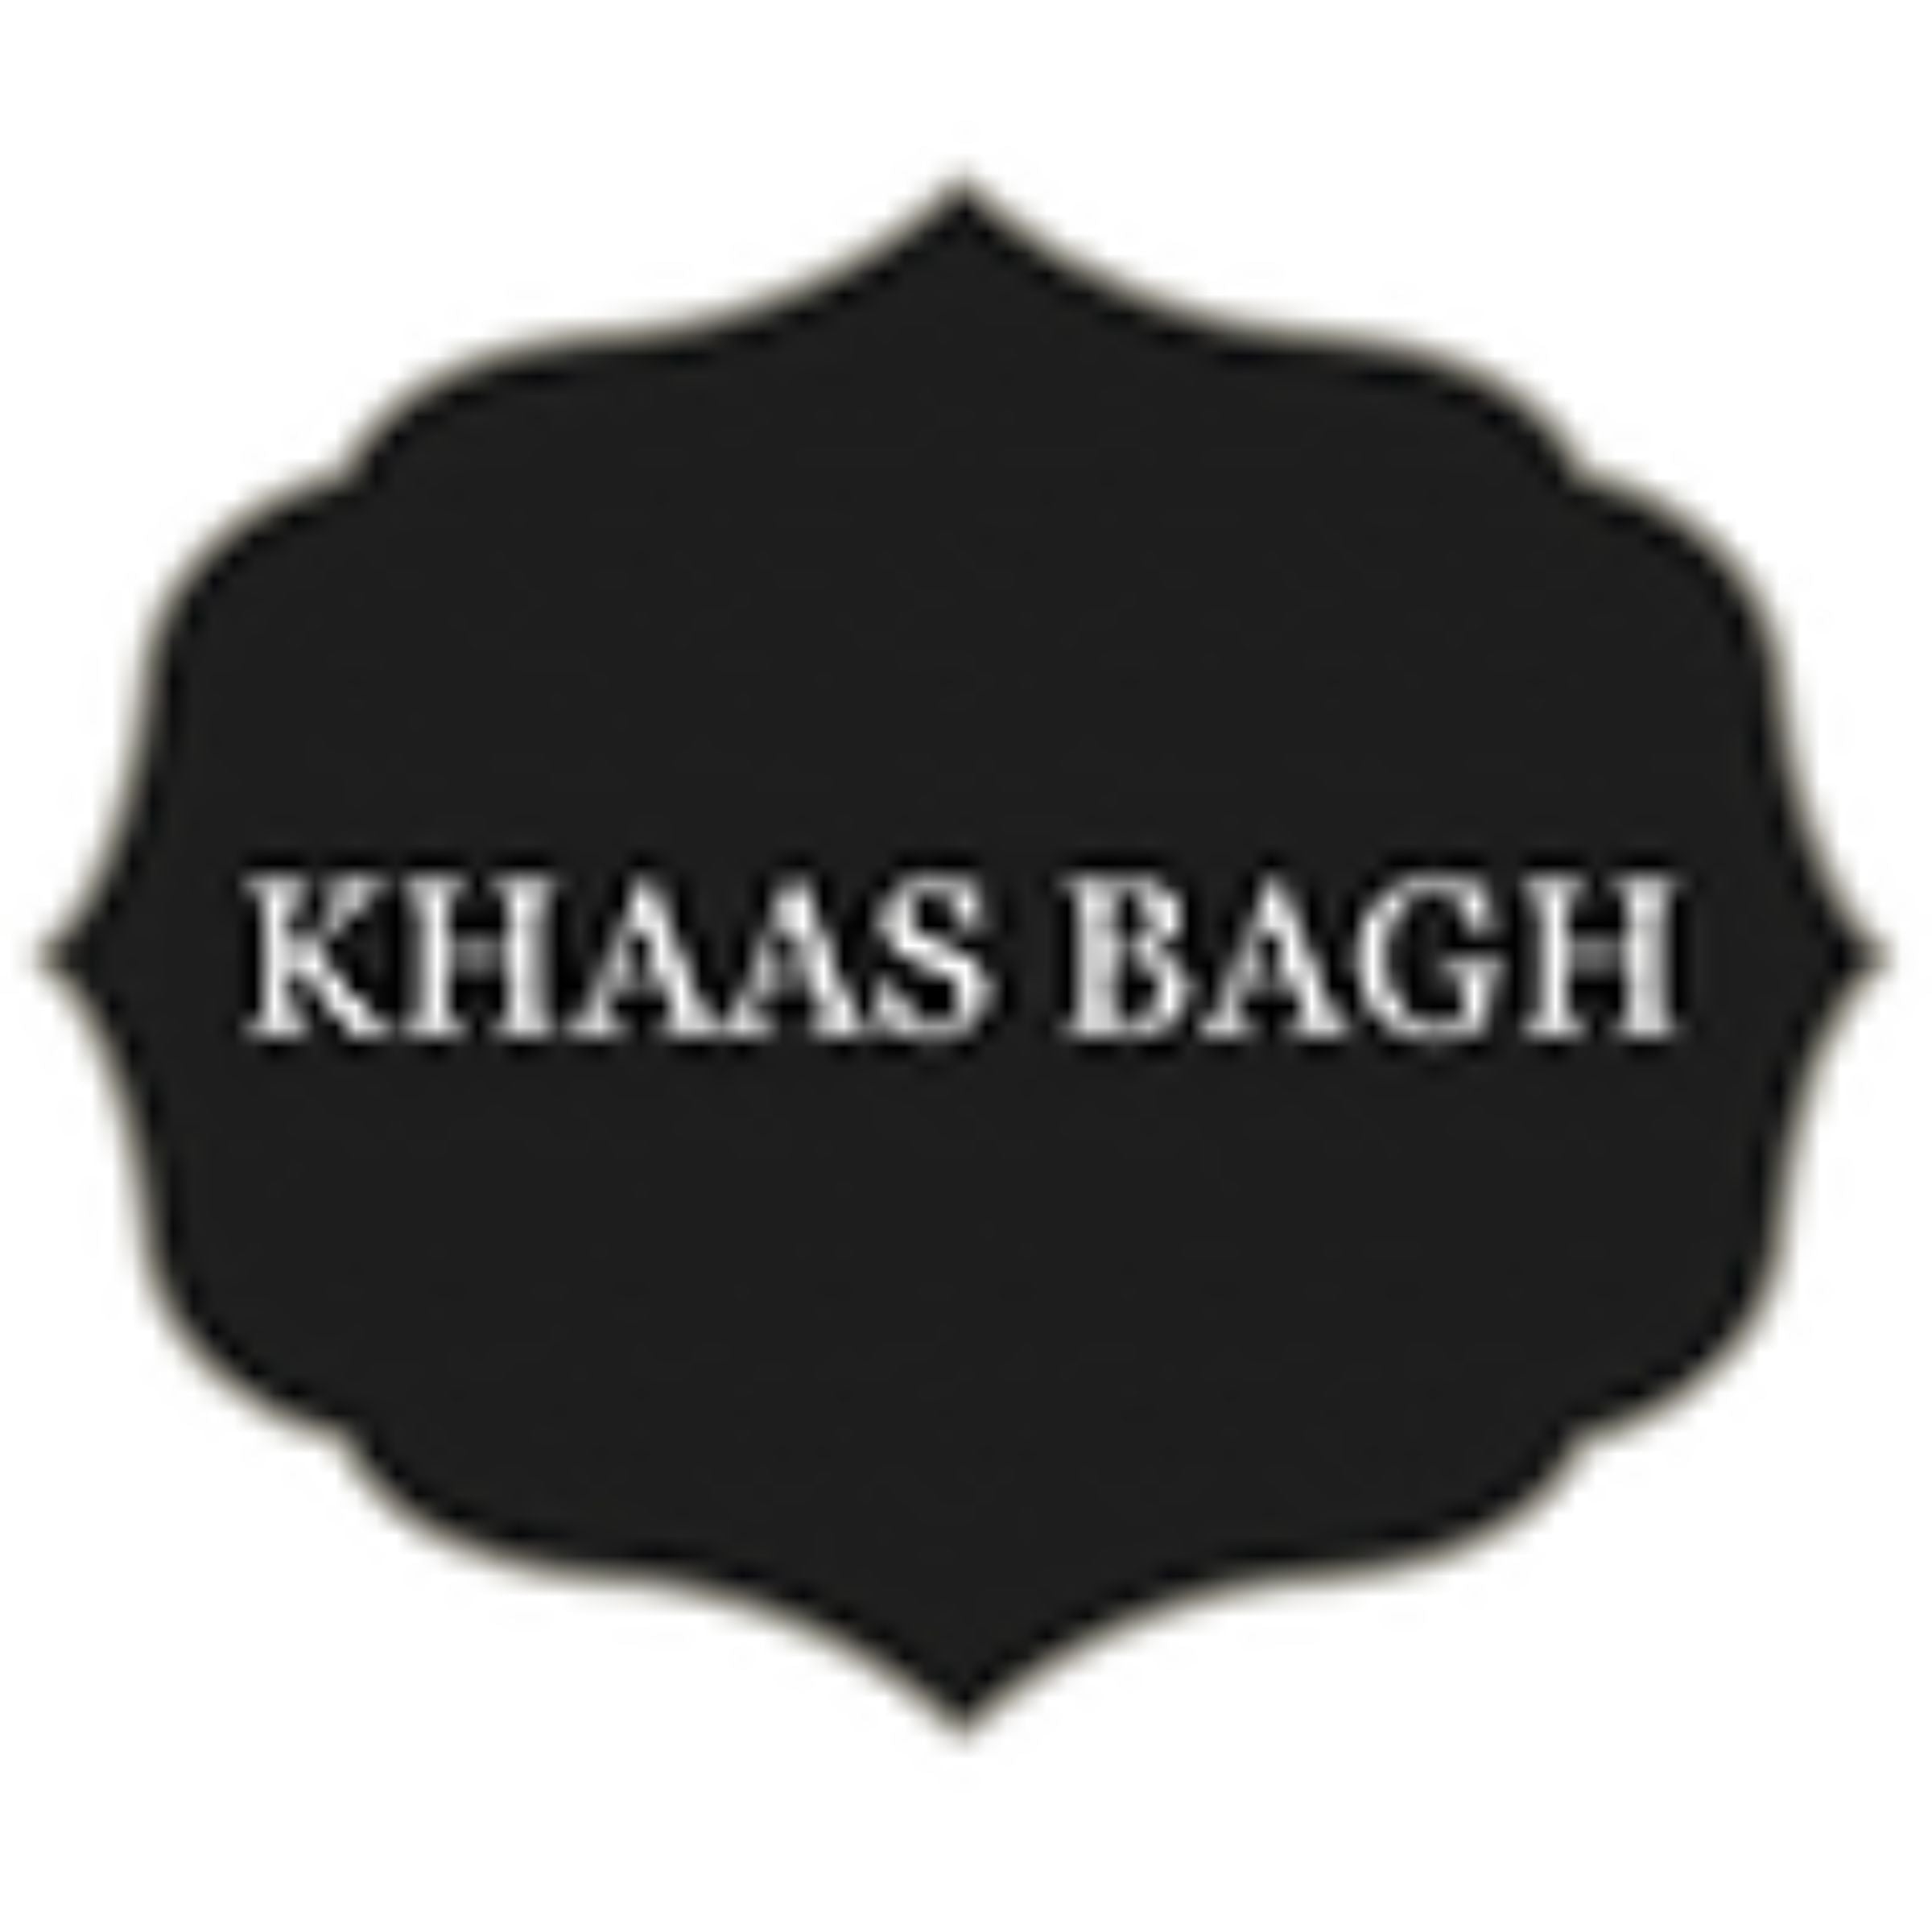 Khaas bagh hotel logo